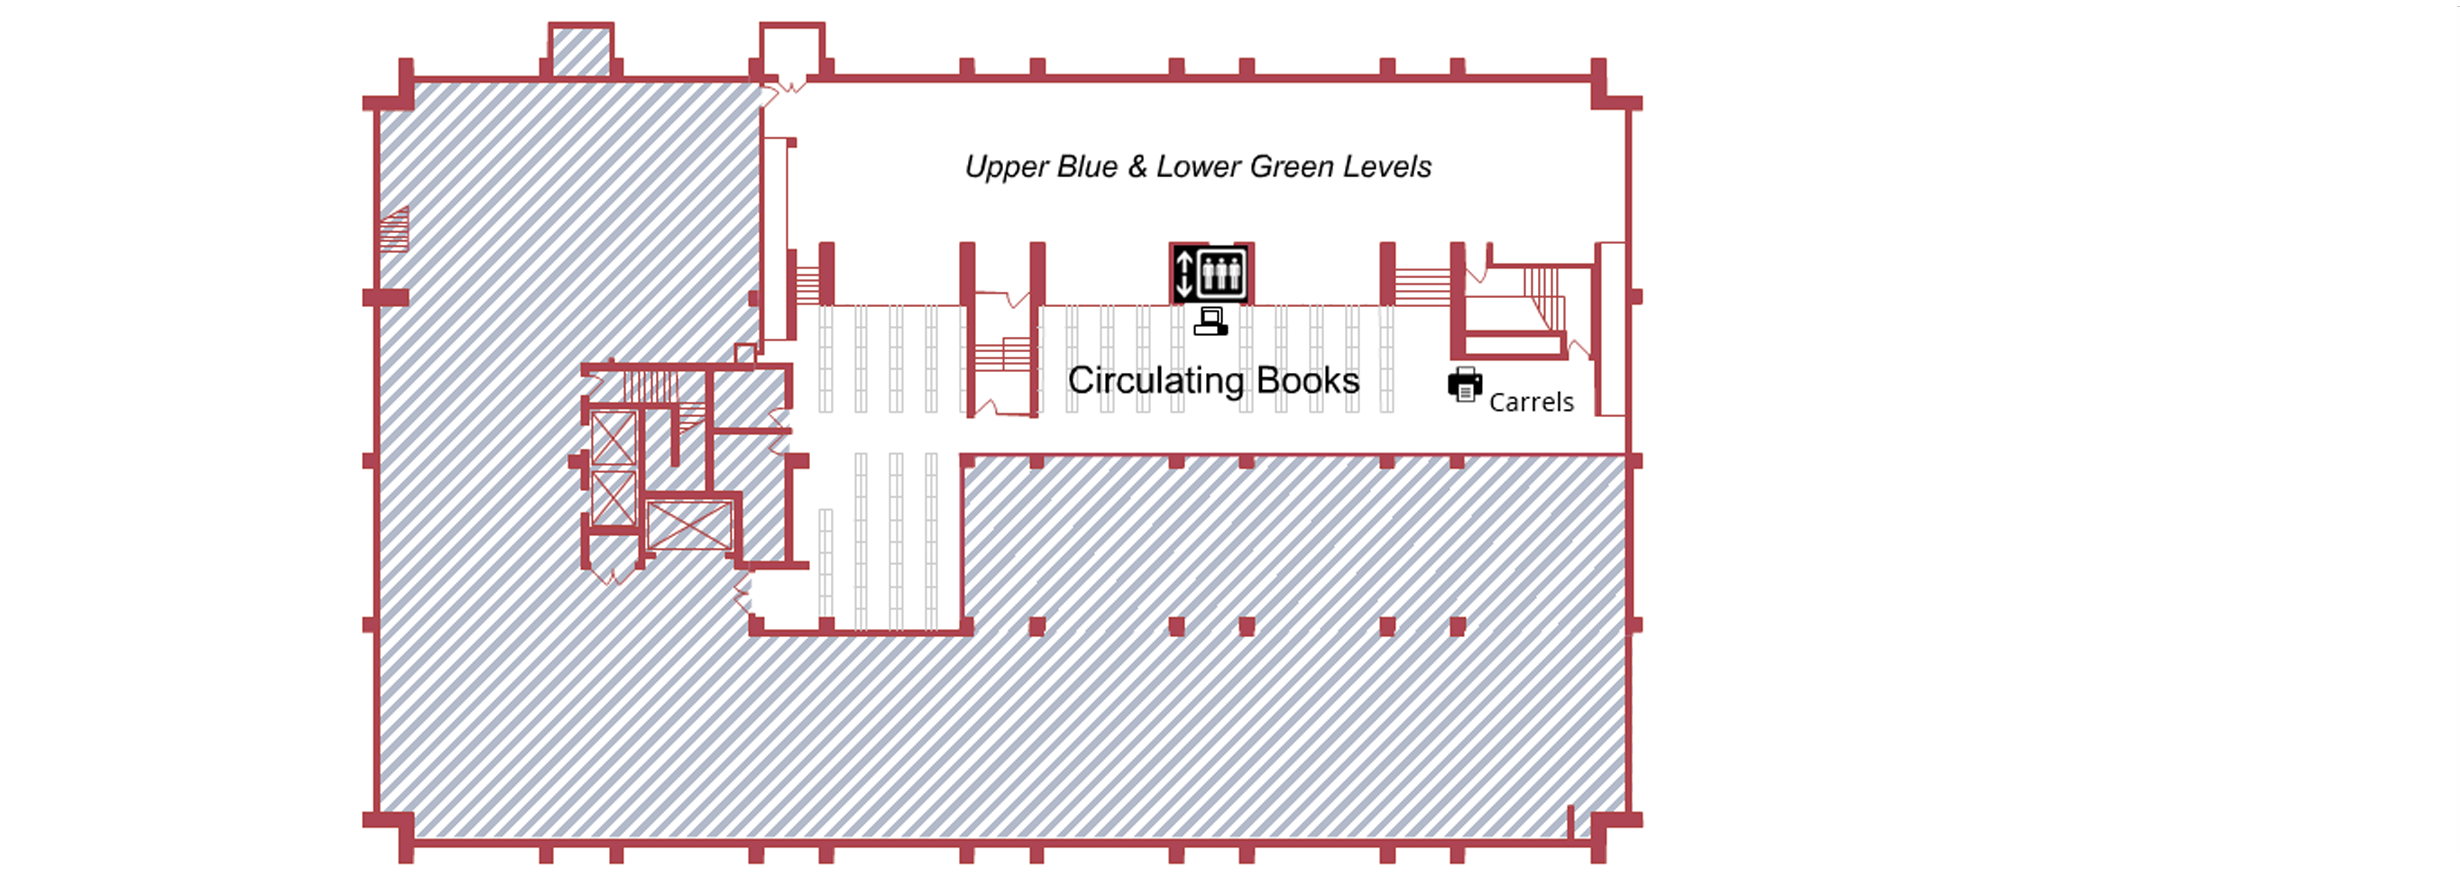 Red Level floor plan, Biotech Commons. Full description is below.